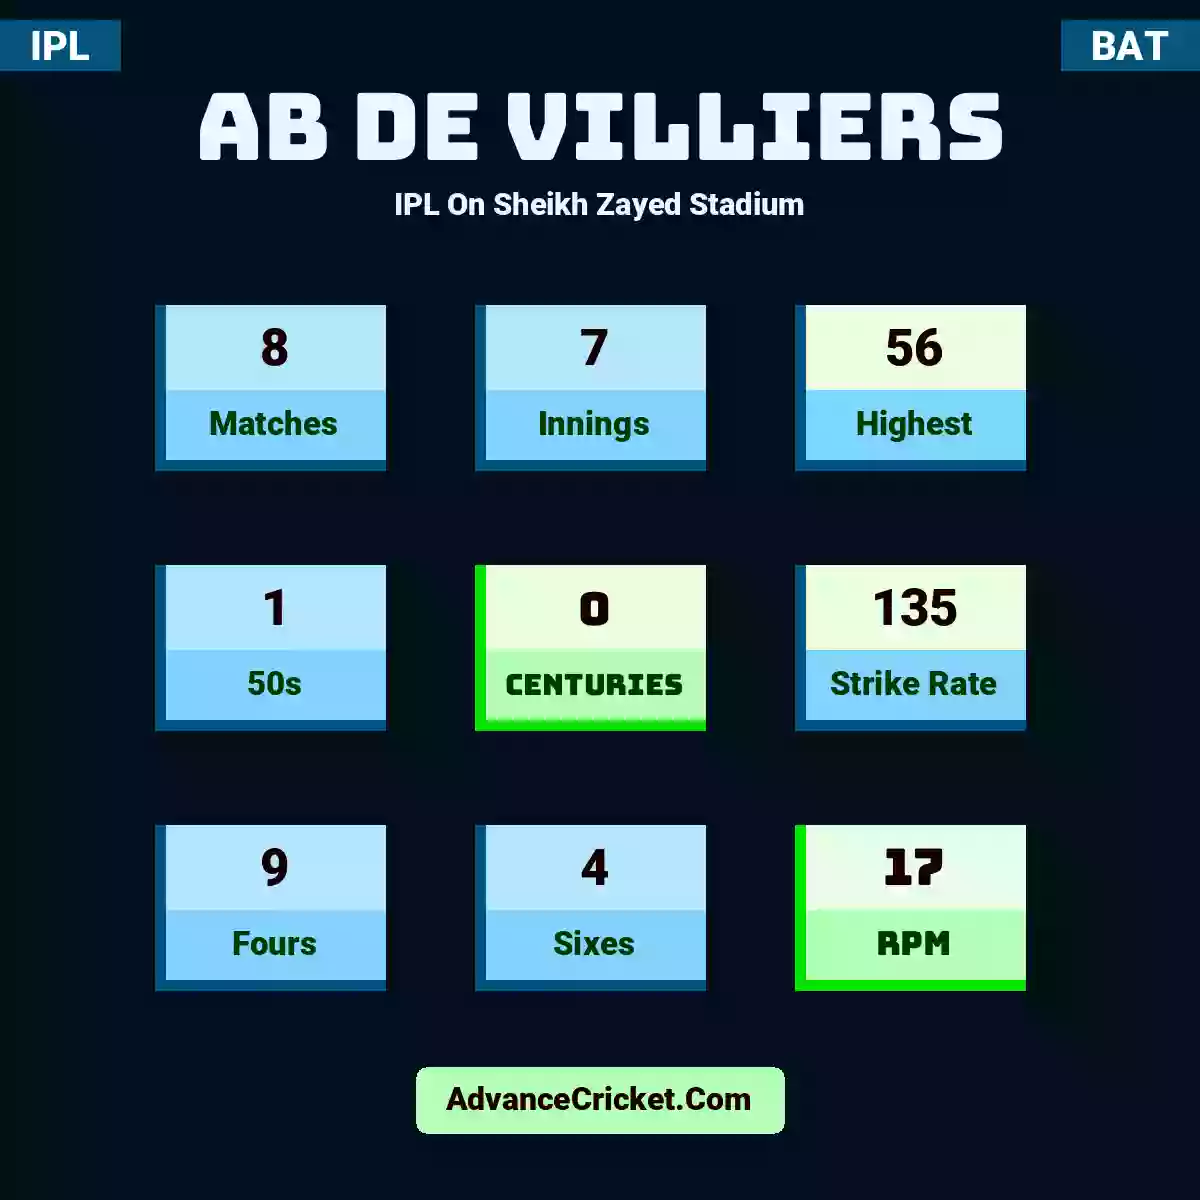 AB de Villiers IPL  On Sheikh Zayed Stadium, AB de Villiers played 8 matches, scored 56 runs as highest, 1 half-centuries, and 0 centuries, with a strike rate of 135. A.Villiers hit 9 fours and 4 sixes, with an RPM of 17.